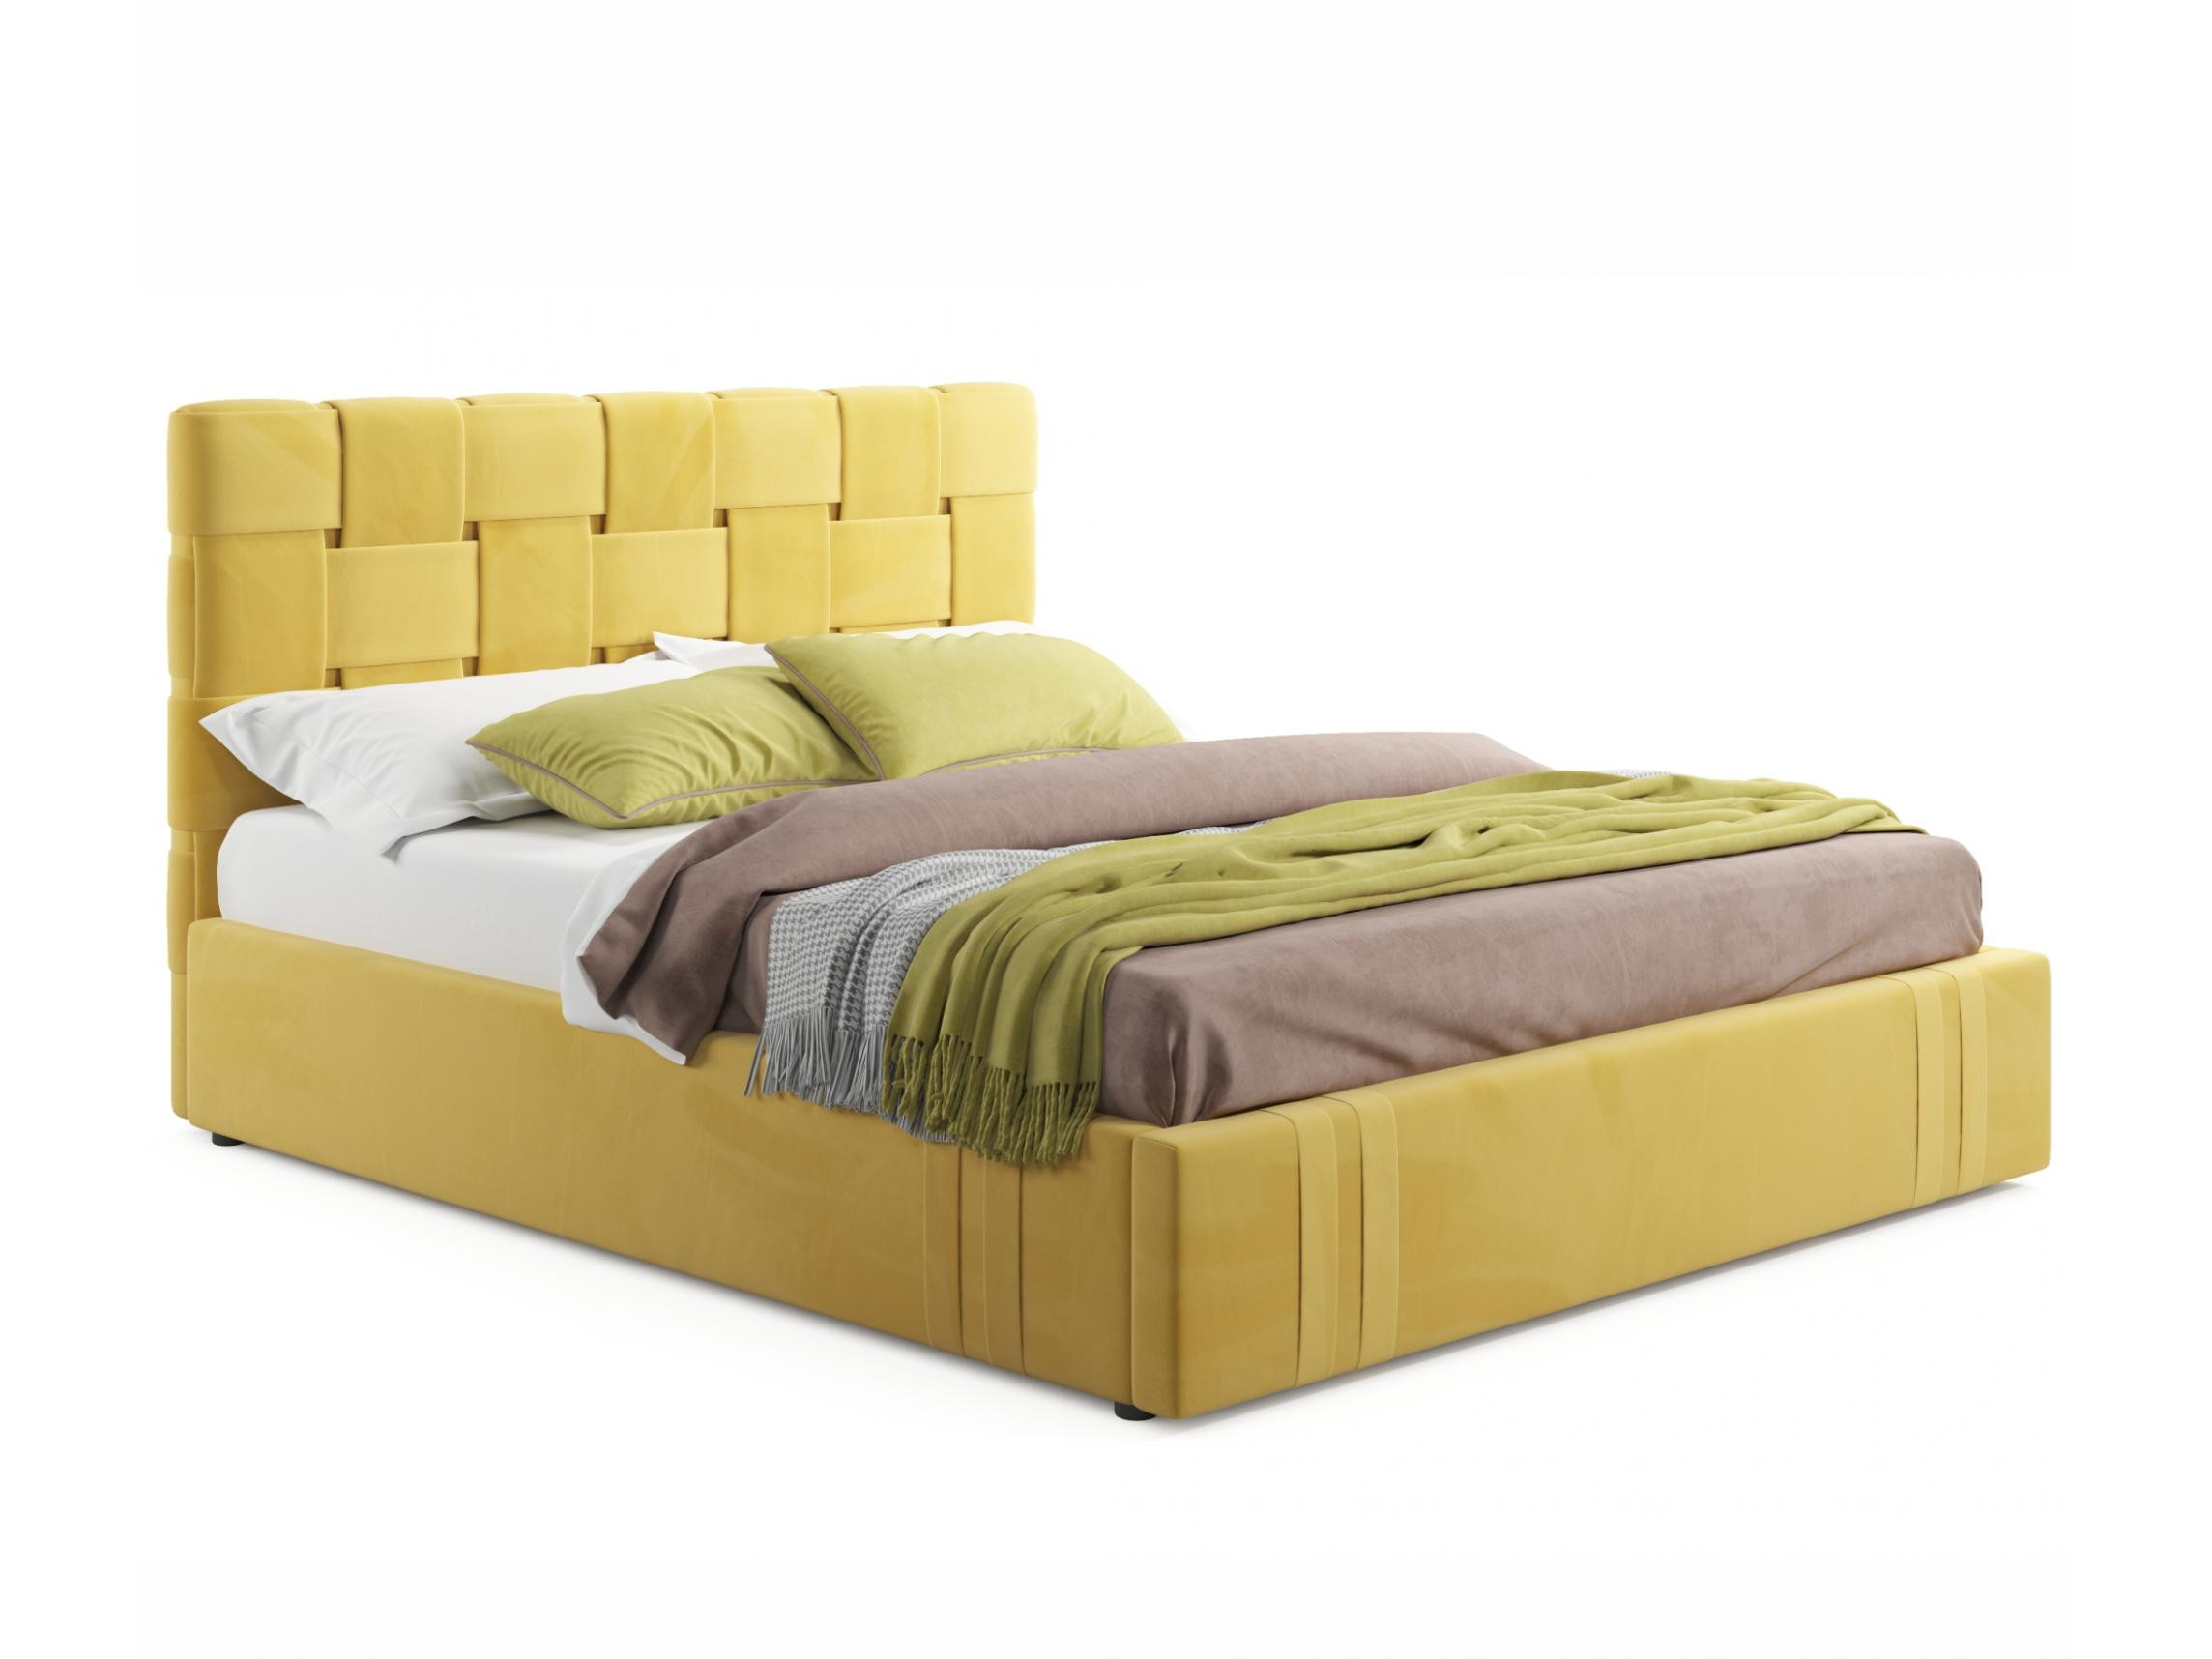 Комплект для сна Tiffany 1600 желтый с подъемным механизмом желтый, Желтый, Велюр, ДСП комплект для сна амели 1600 капучино с подъемным механиз